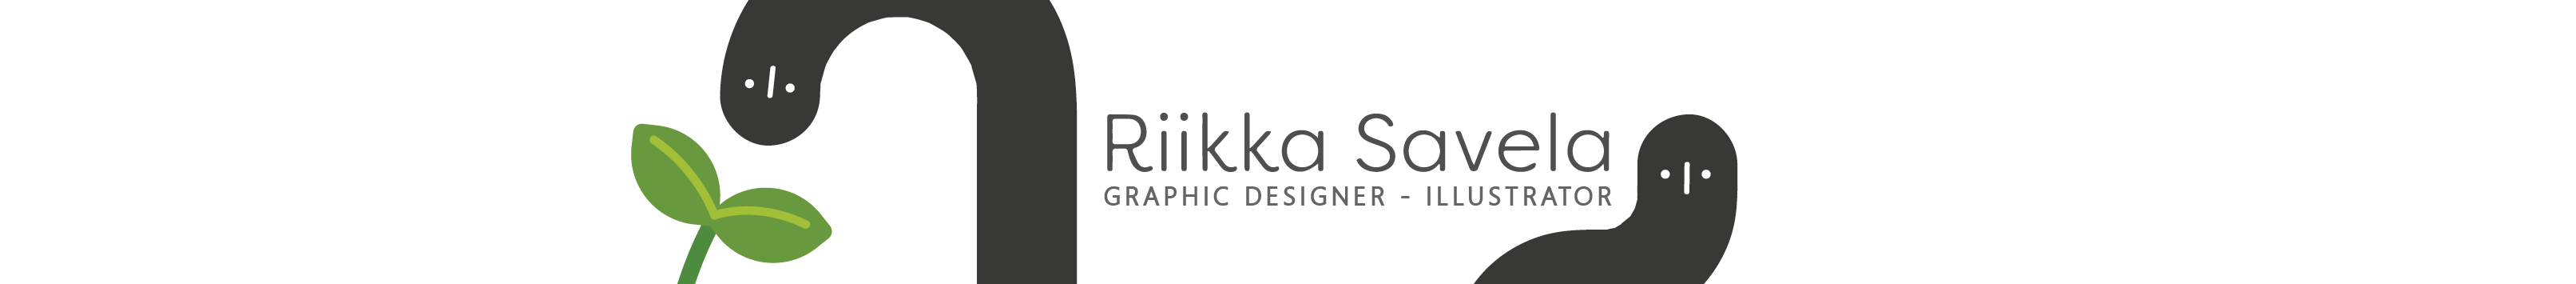 Riikka Savela's profile banner